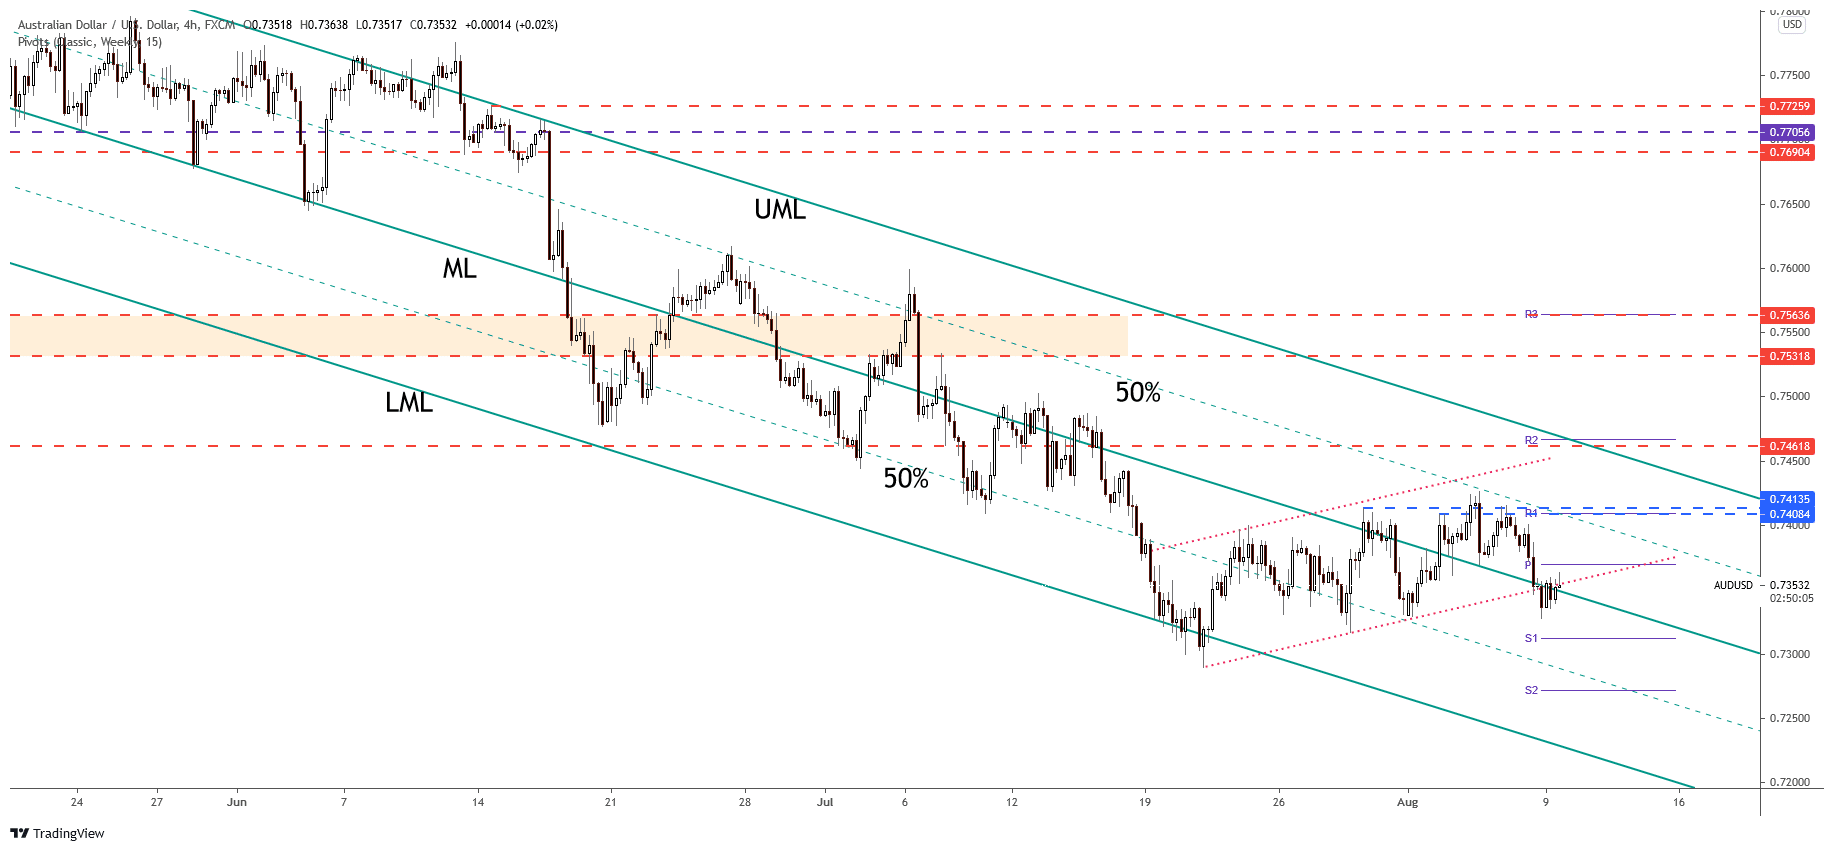 AUD/USD 4-hour price chart